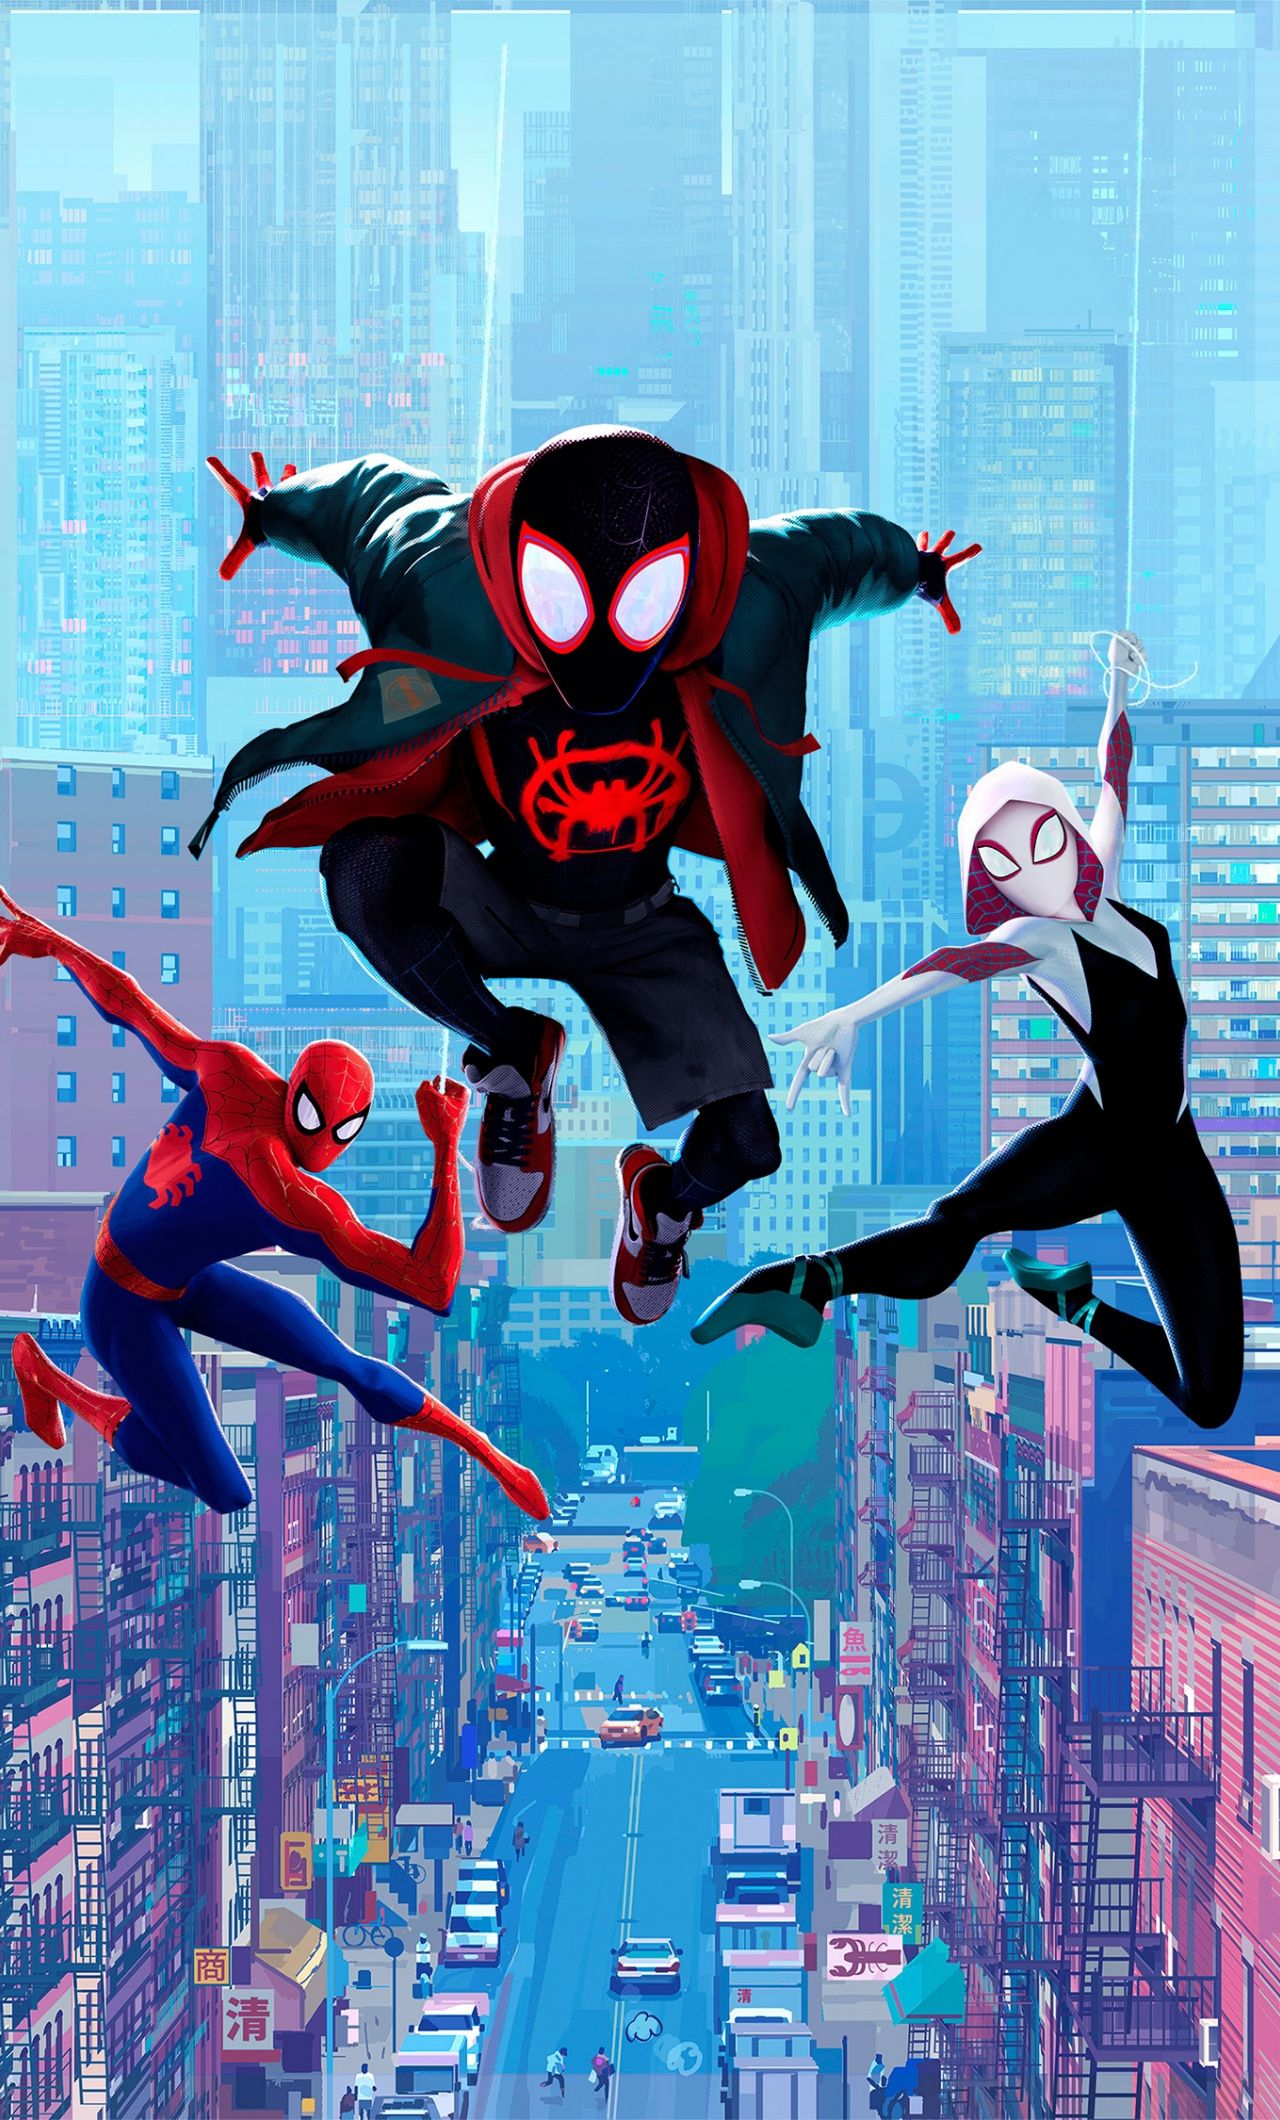 Download Movie, Fan Art, Spider Man: Into The Spider Verse Wallpaper, 1280x IPhone 6 Plus